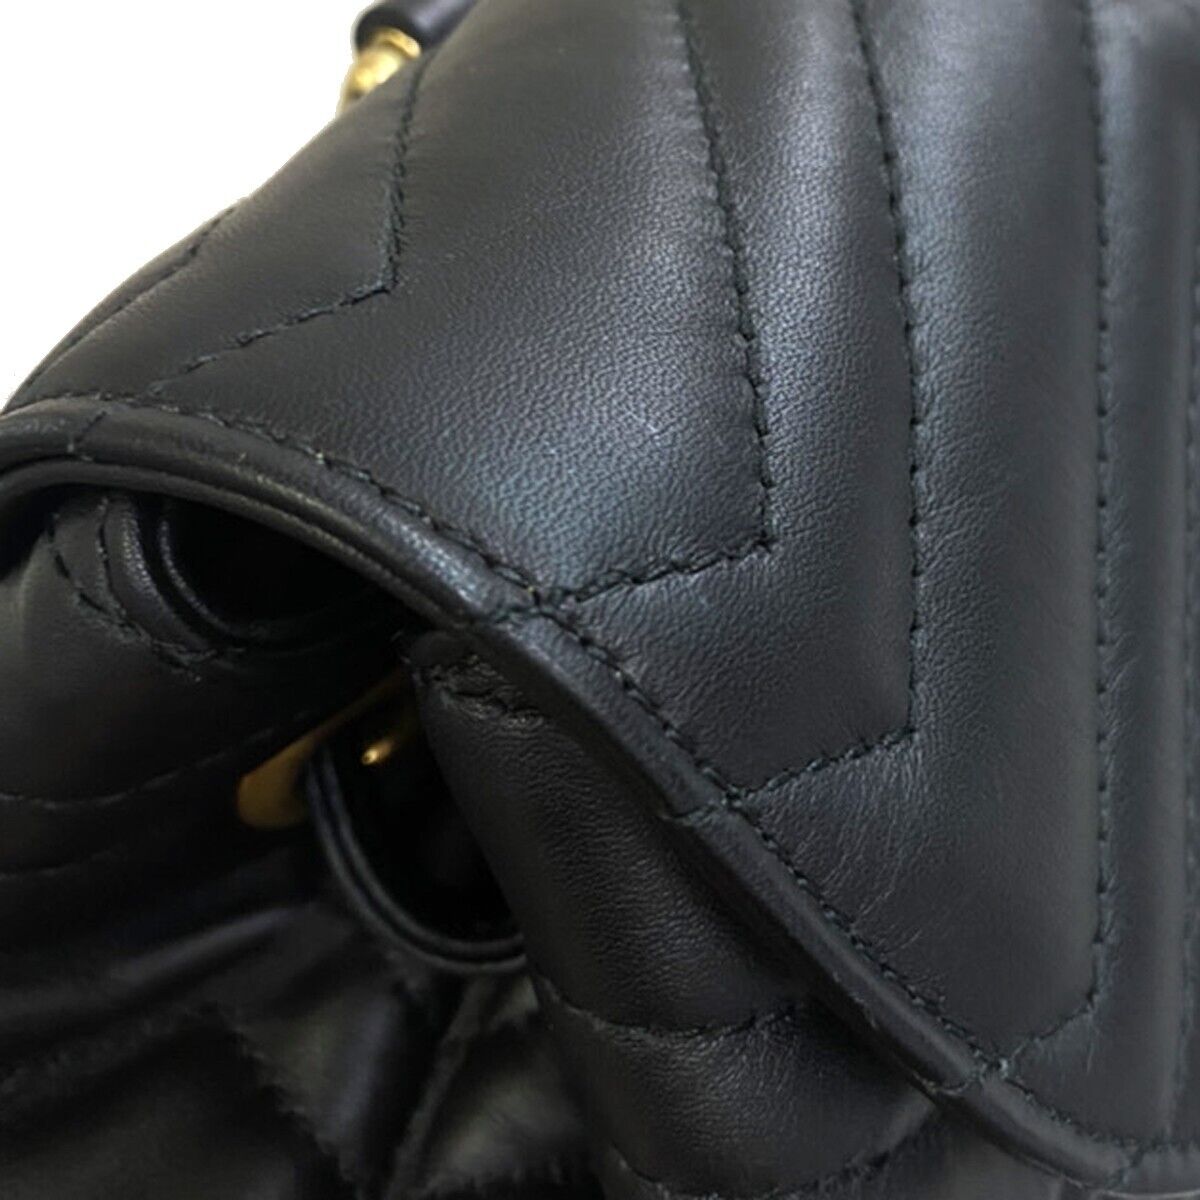 Gucci Women's Elegant Black Leather Backpack in Black